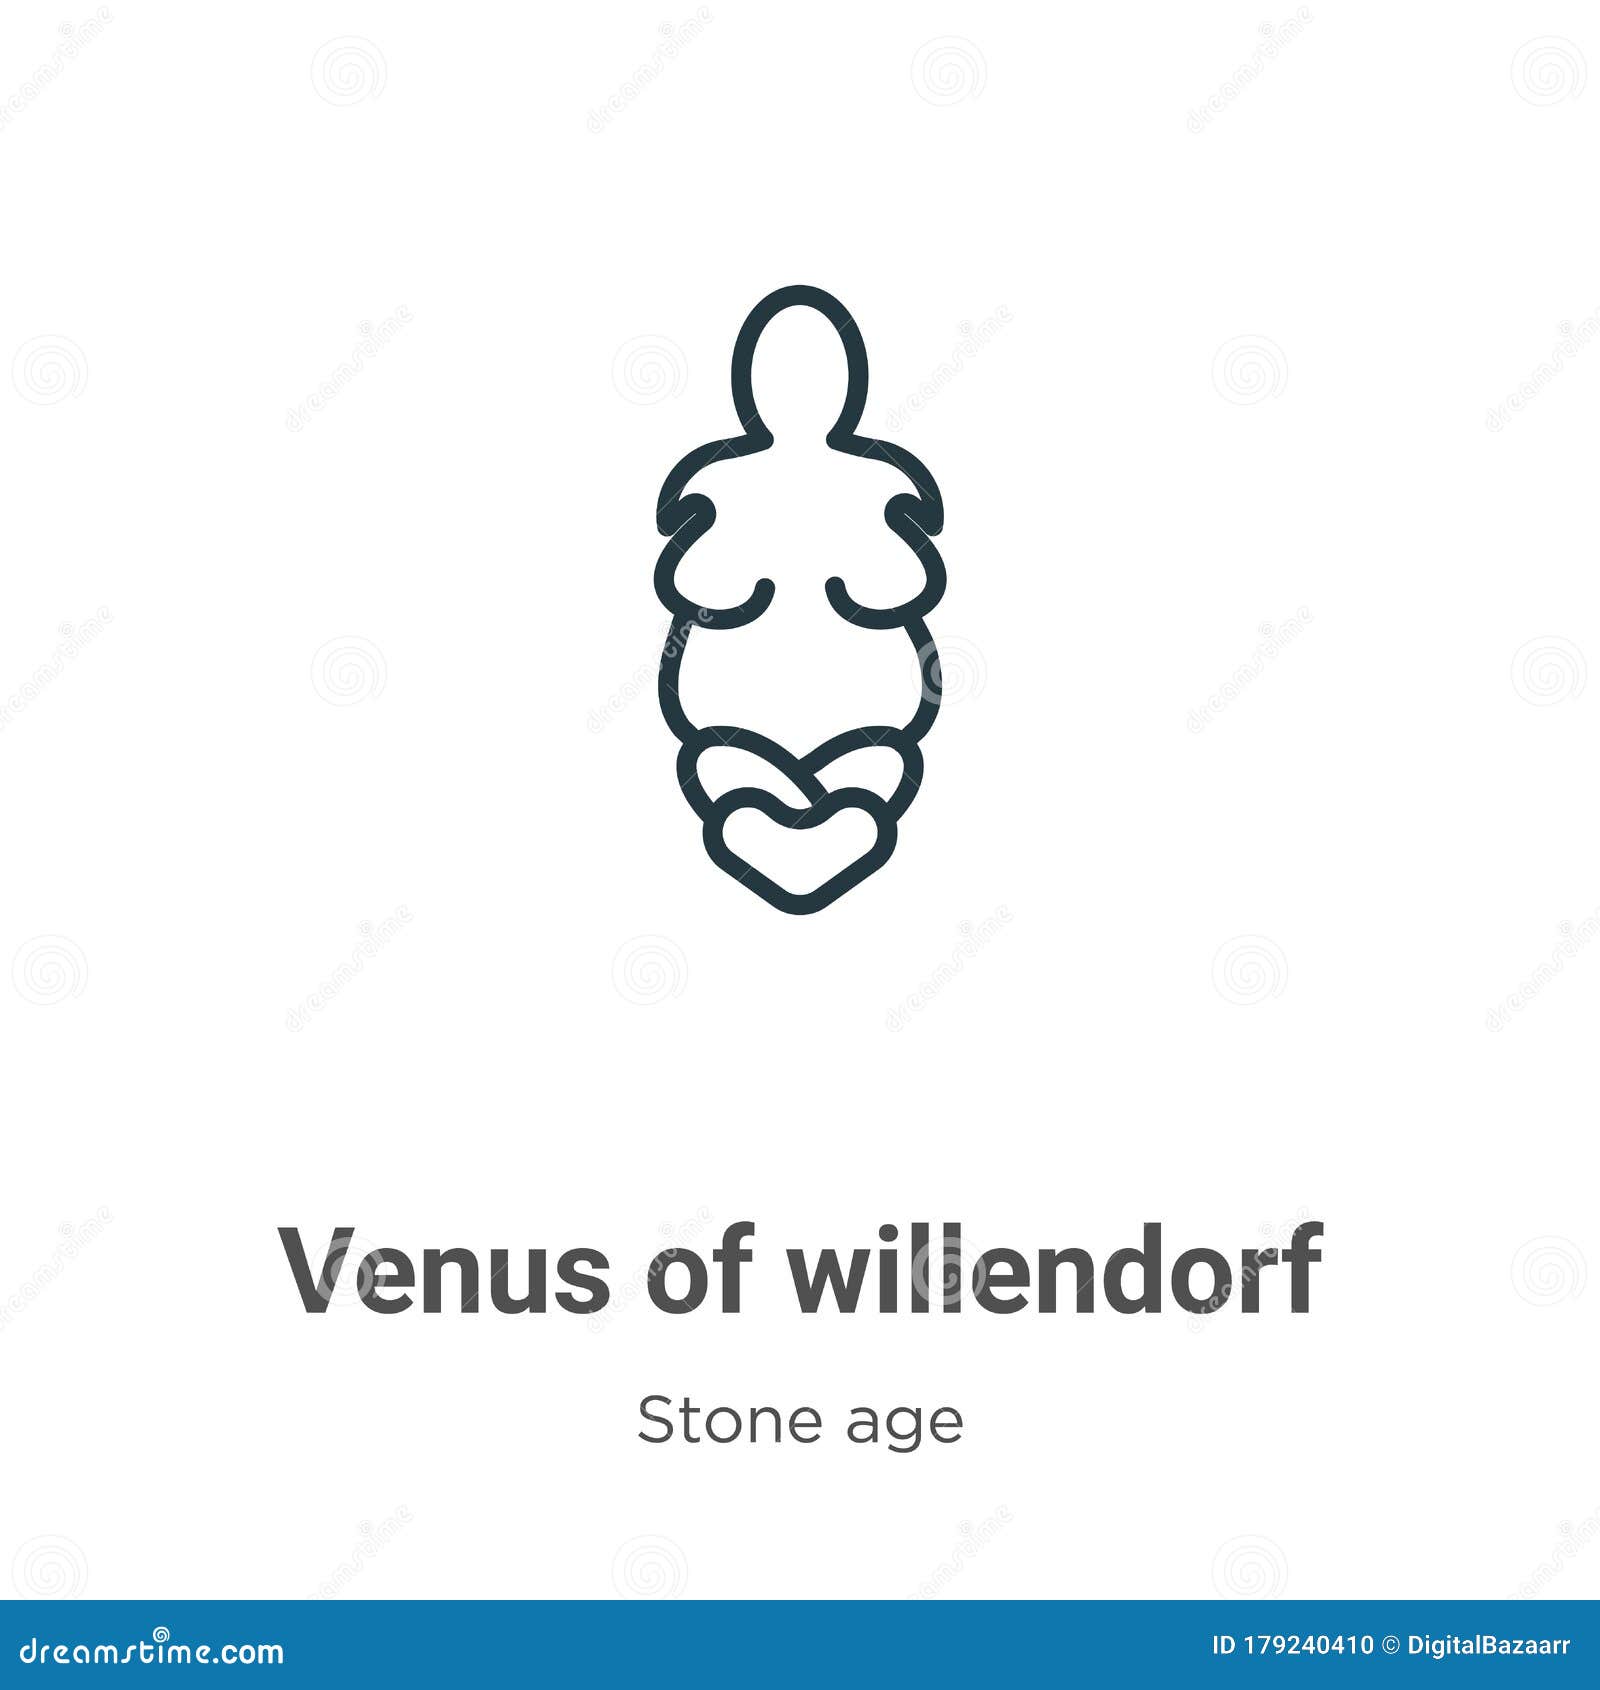 venus of willendorf outline  icon. thin line black venus of willendorf icon, flat  simple   from